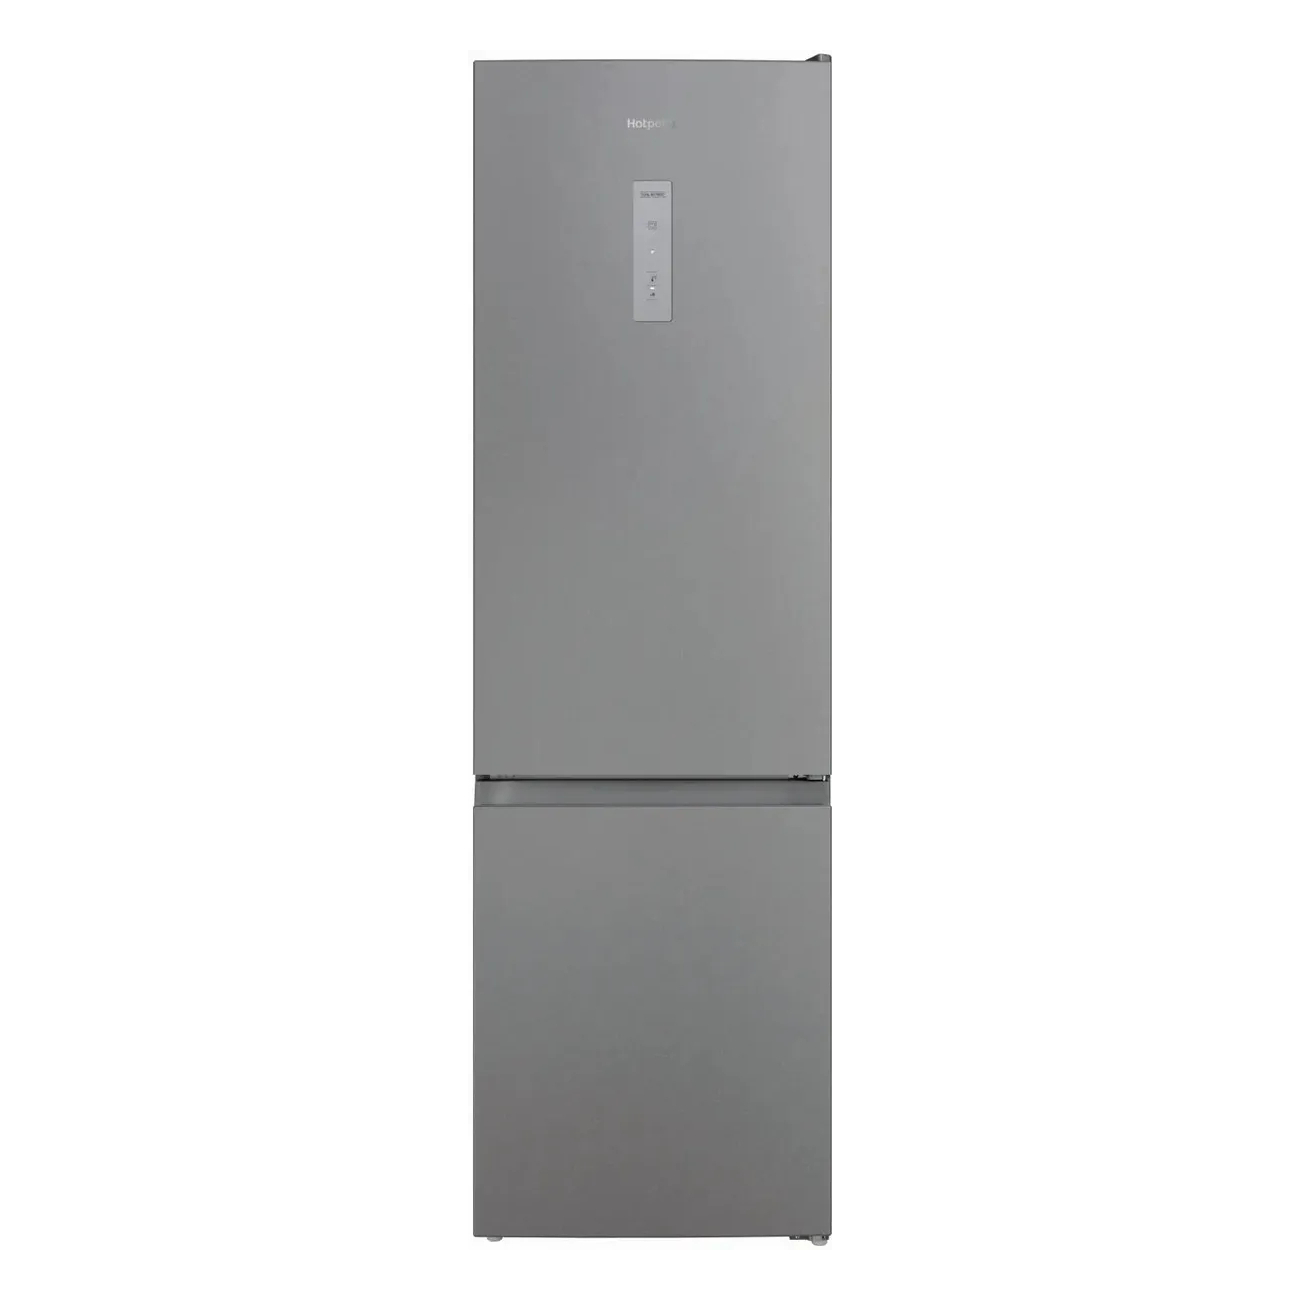 Холодильник HotPoint HT 5200 S серебристый двухкамерный холодильник hotpoint ht 5200 s серебристый